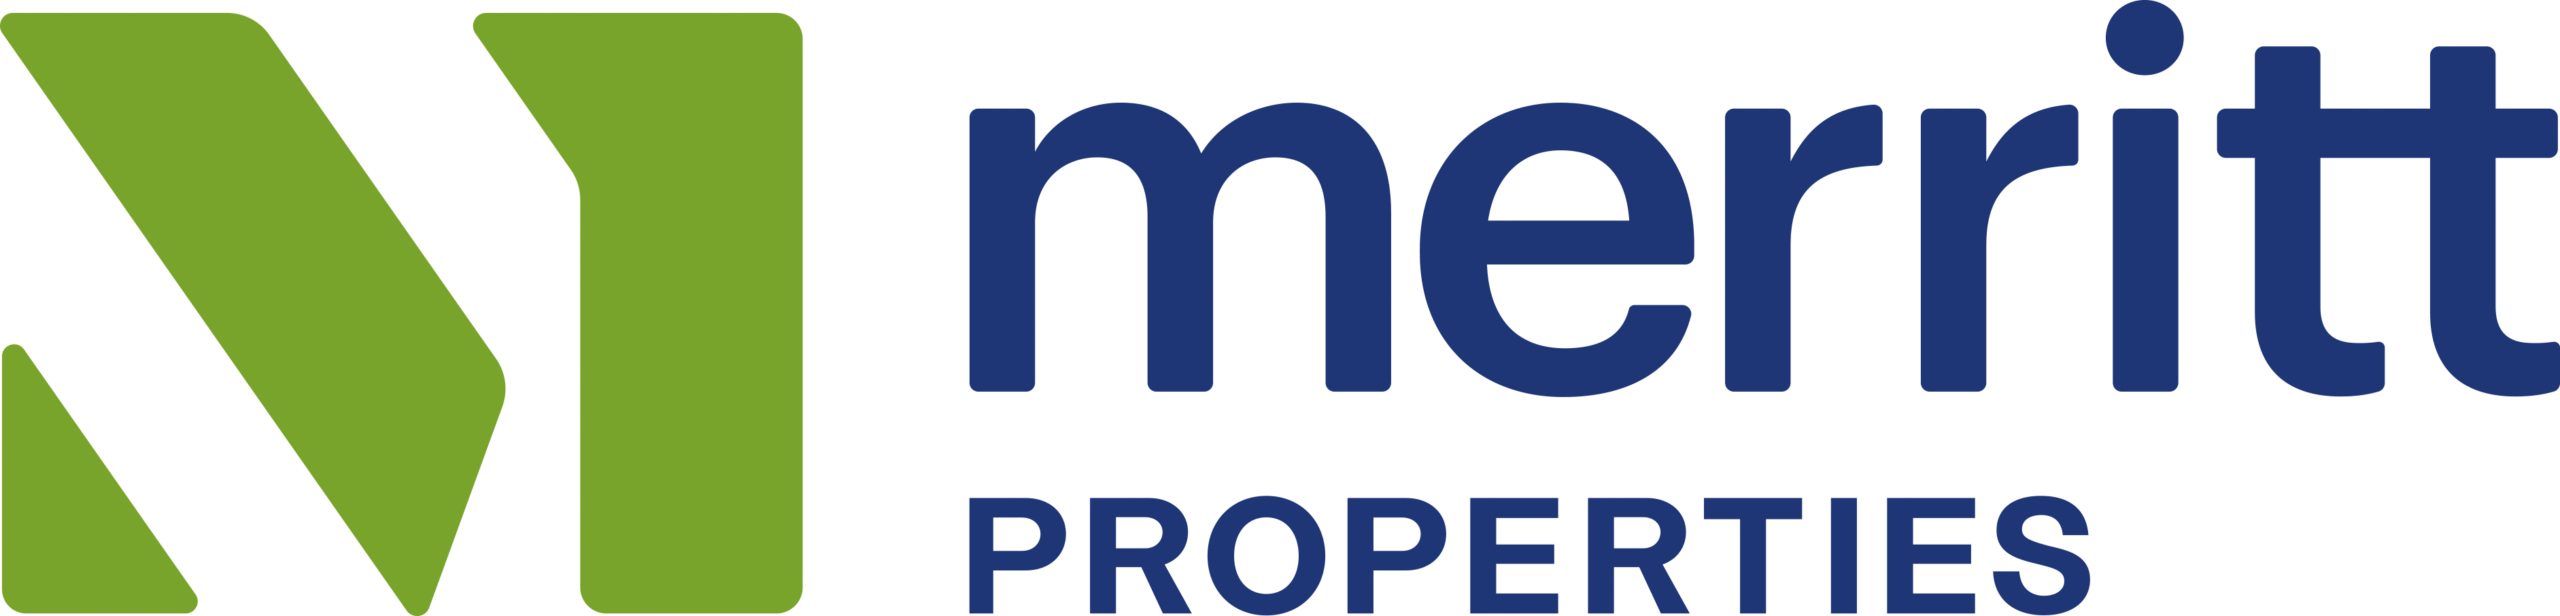 Merrit Properties Logo | Speculative warehouse construction in Jacksonville, FL | ARCO design build